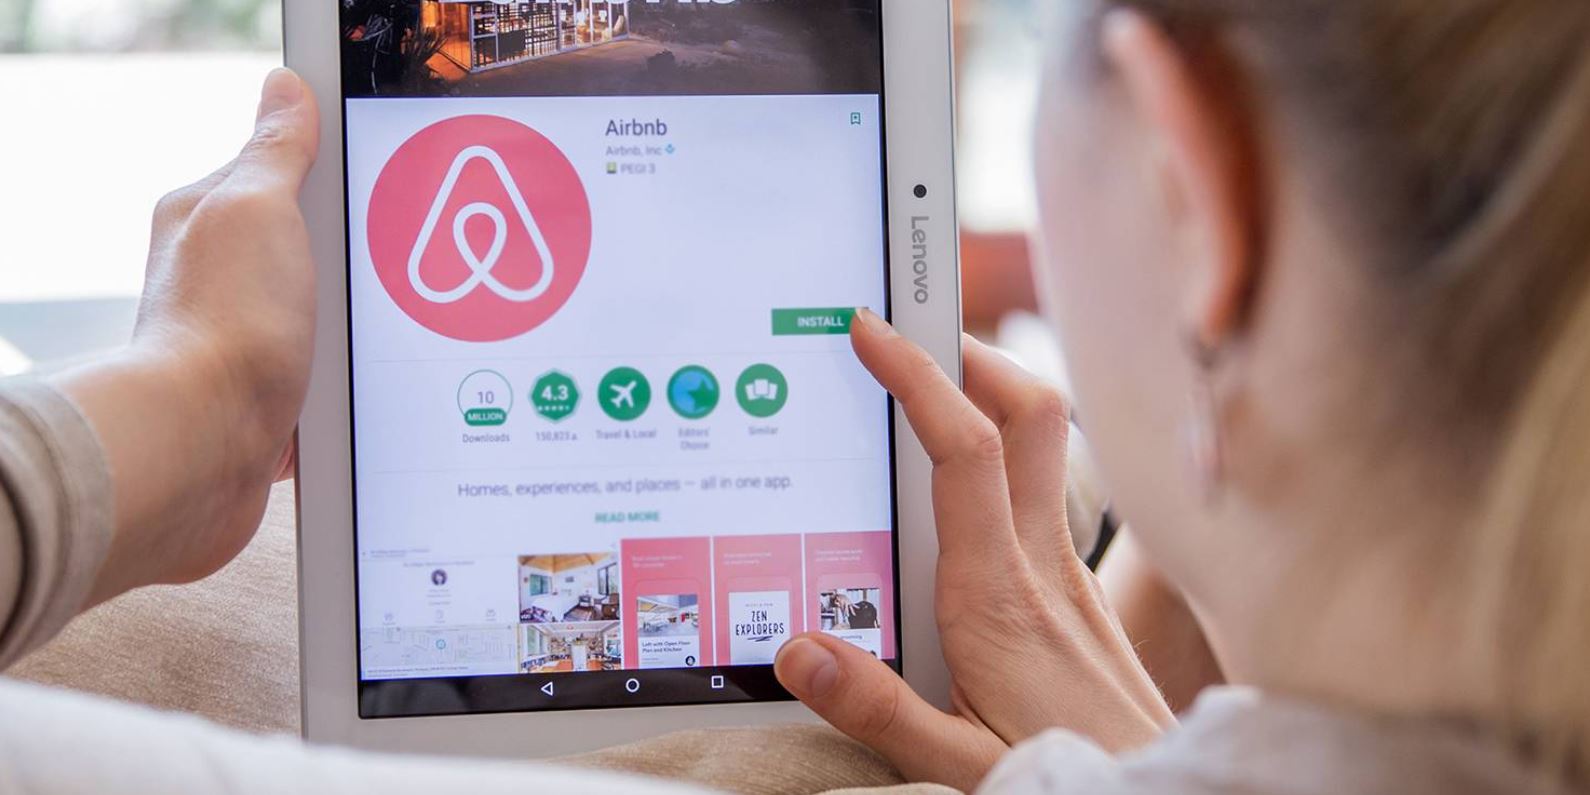 consultation-du-service-airbnb.JPG